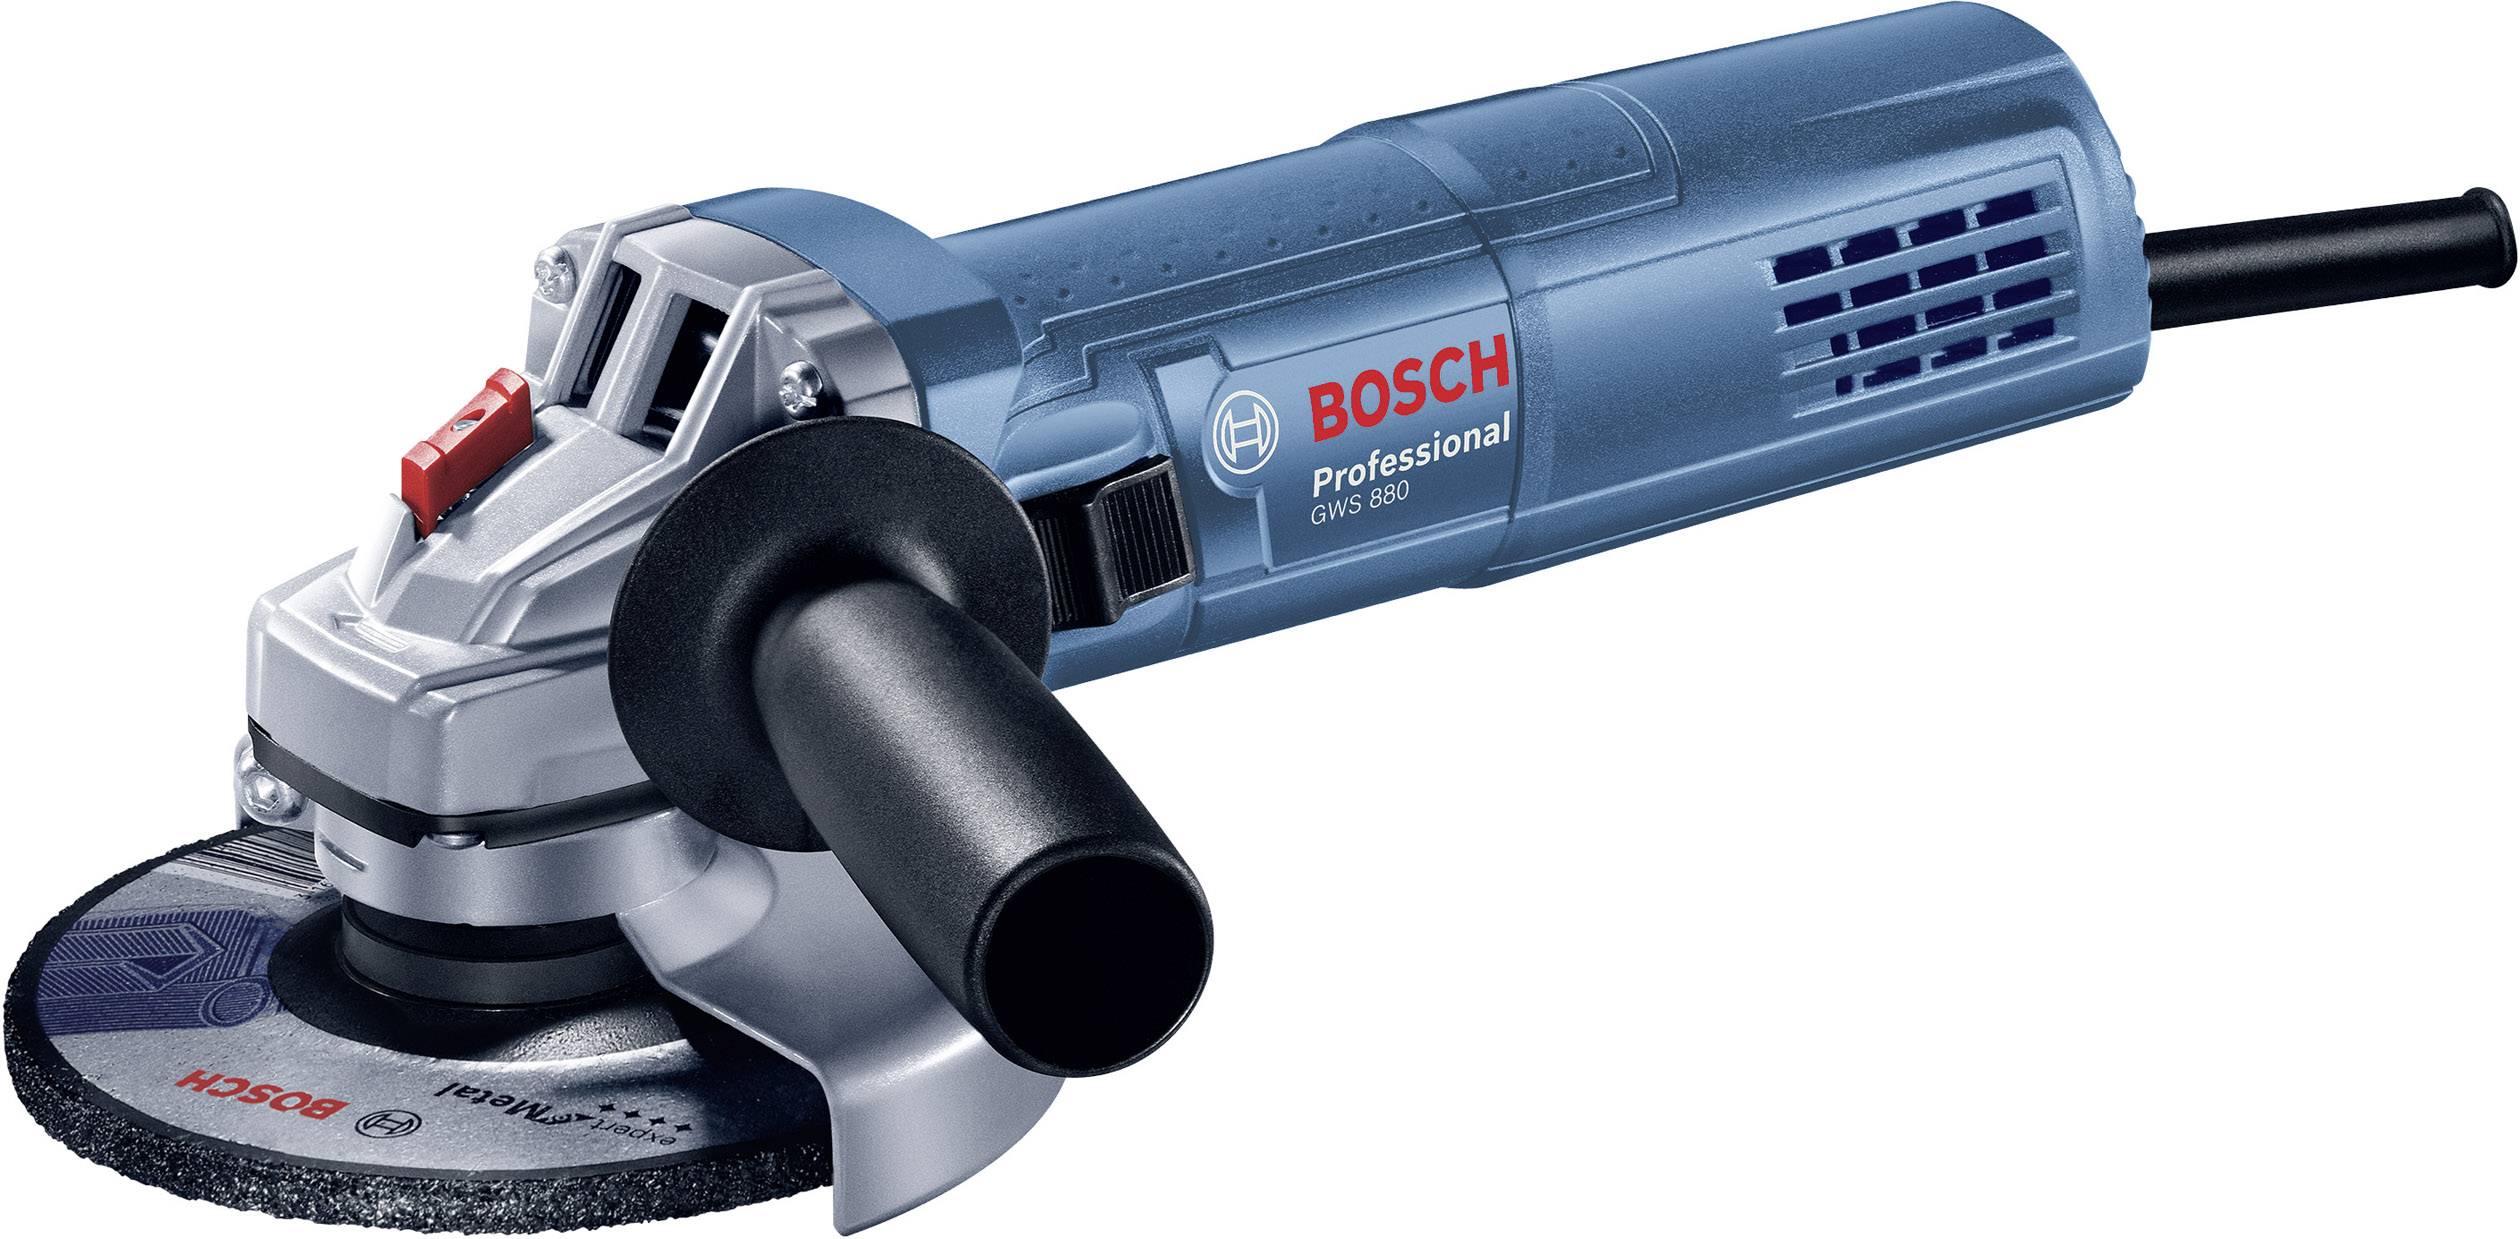 GWS 880 Γωνιακός τροχός Professional 125mm/880W Bosch